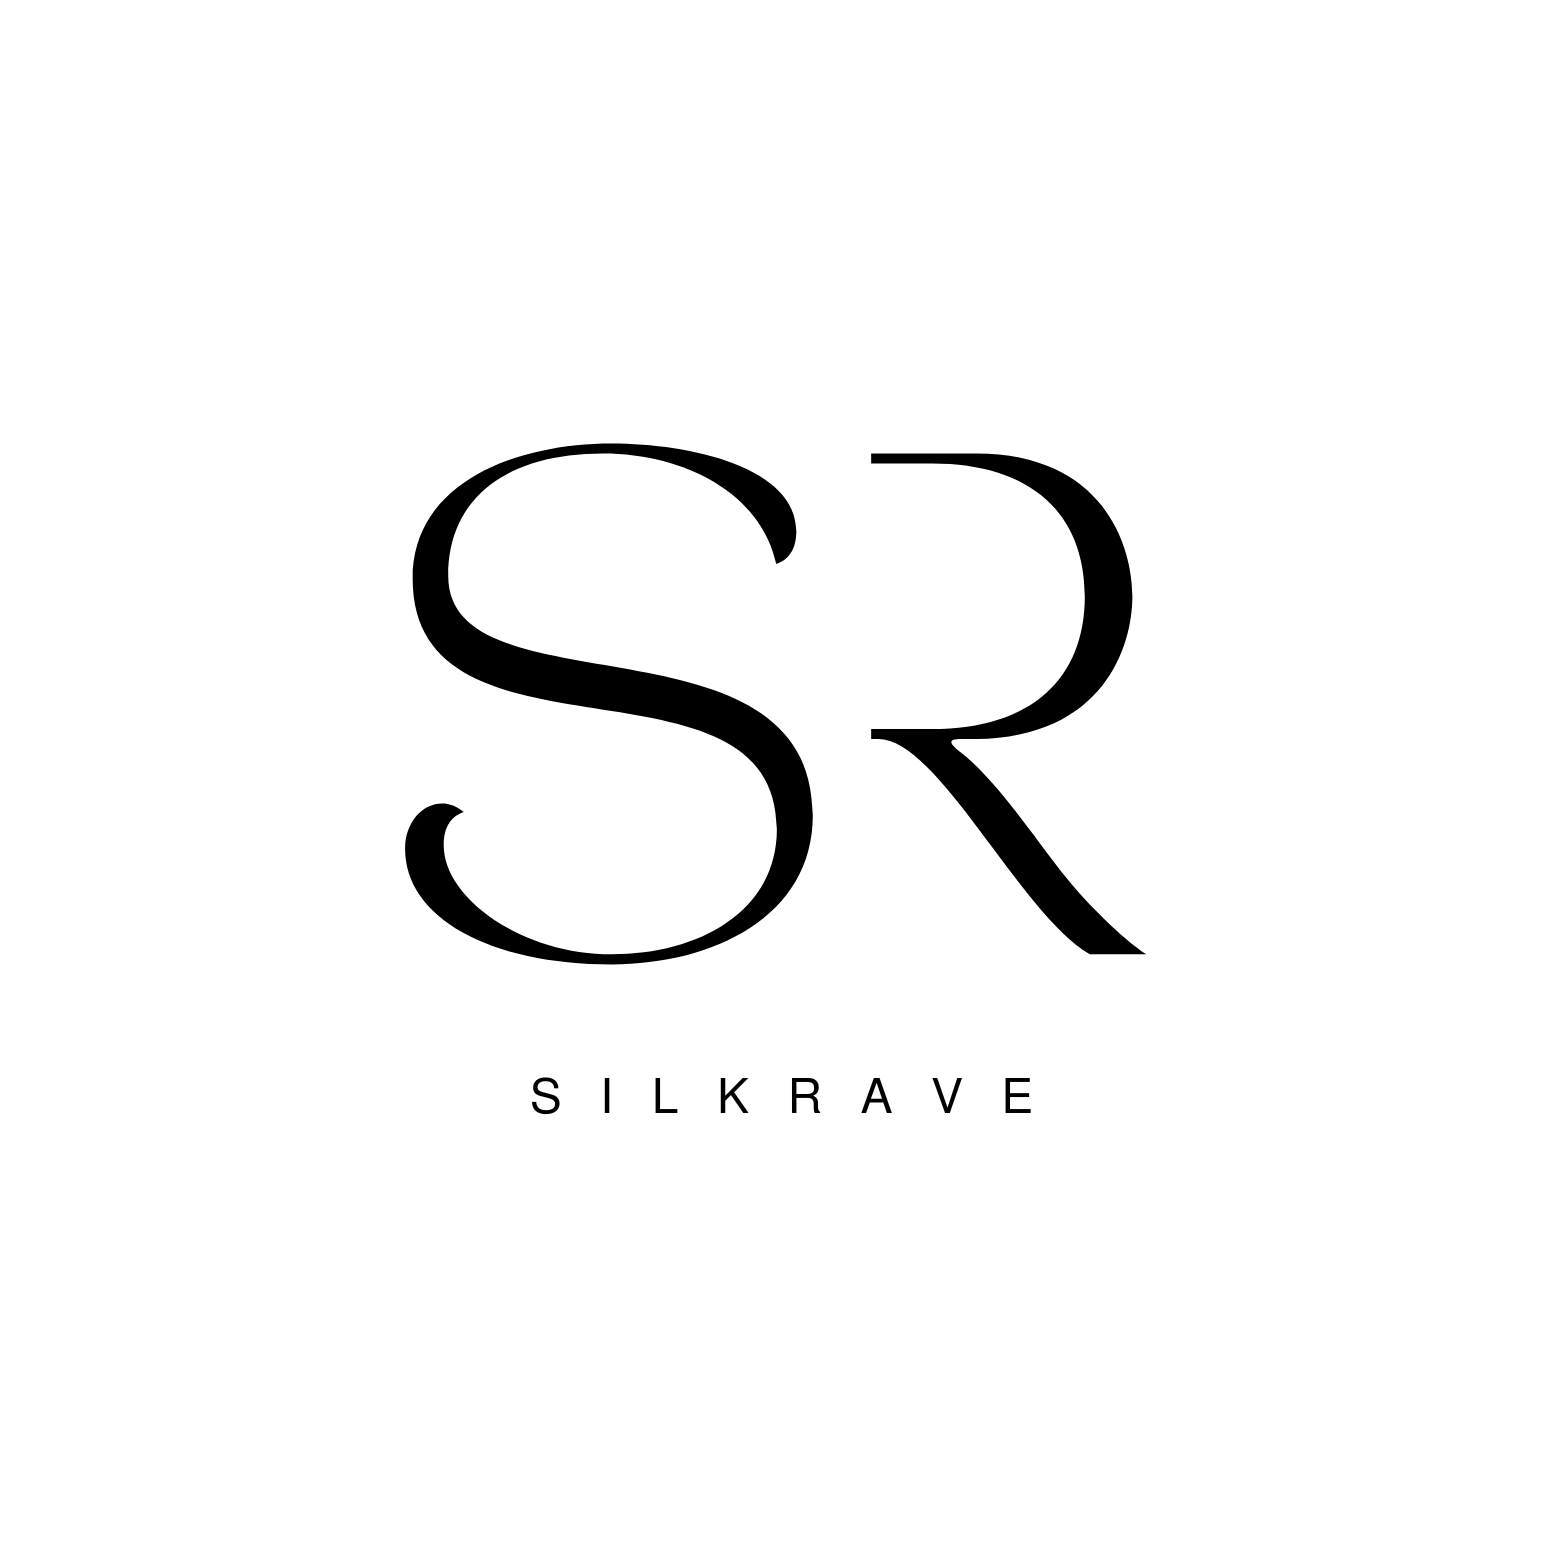 Silkrave